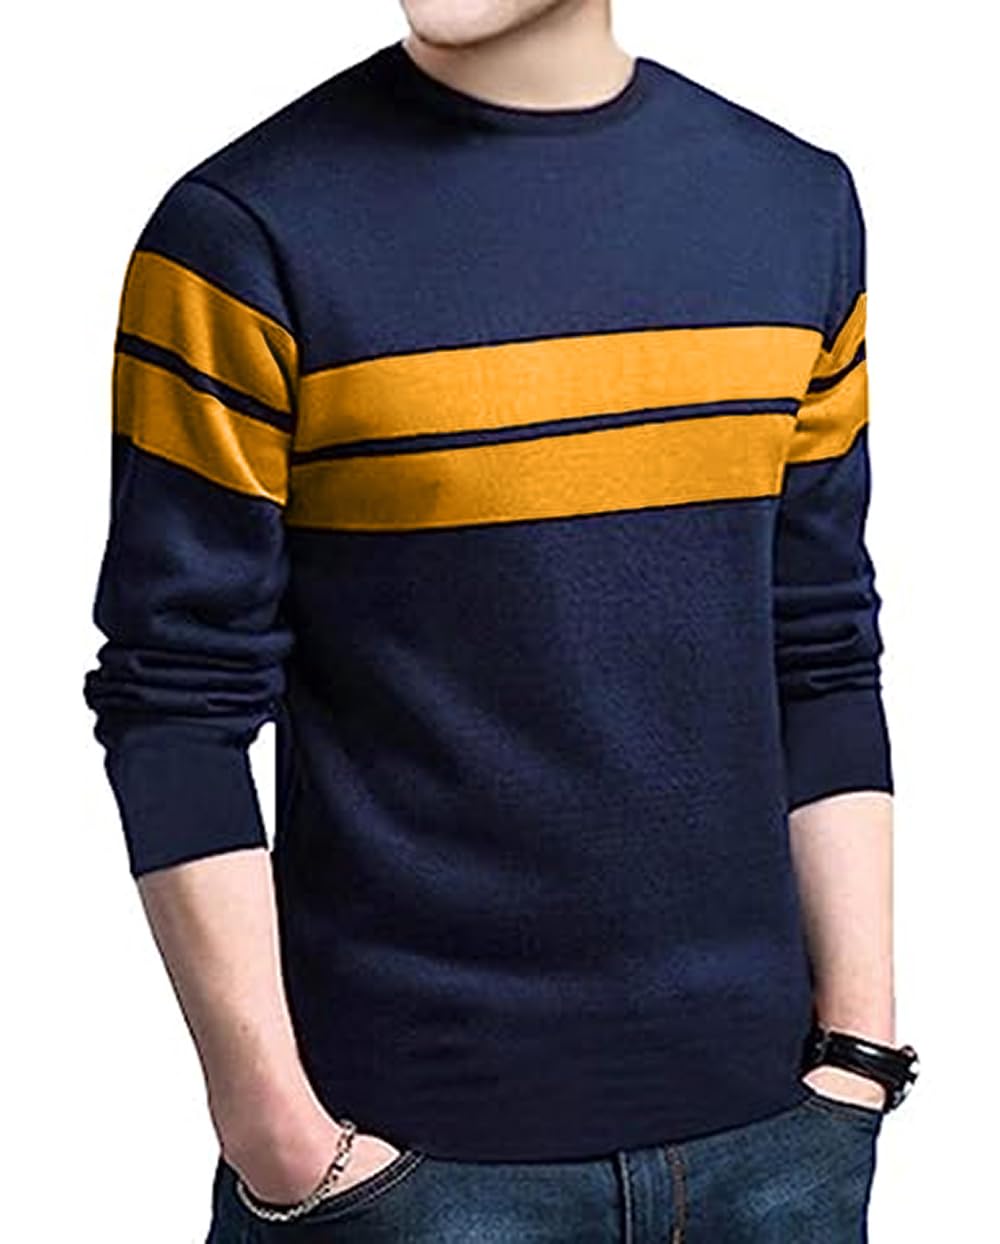 LEOTUDE Full Sleeve Regular Fit Tshirt for Men, Round Neck Longline Cottonblend T-Shirt (Color Navy)